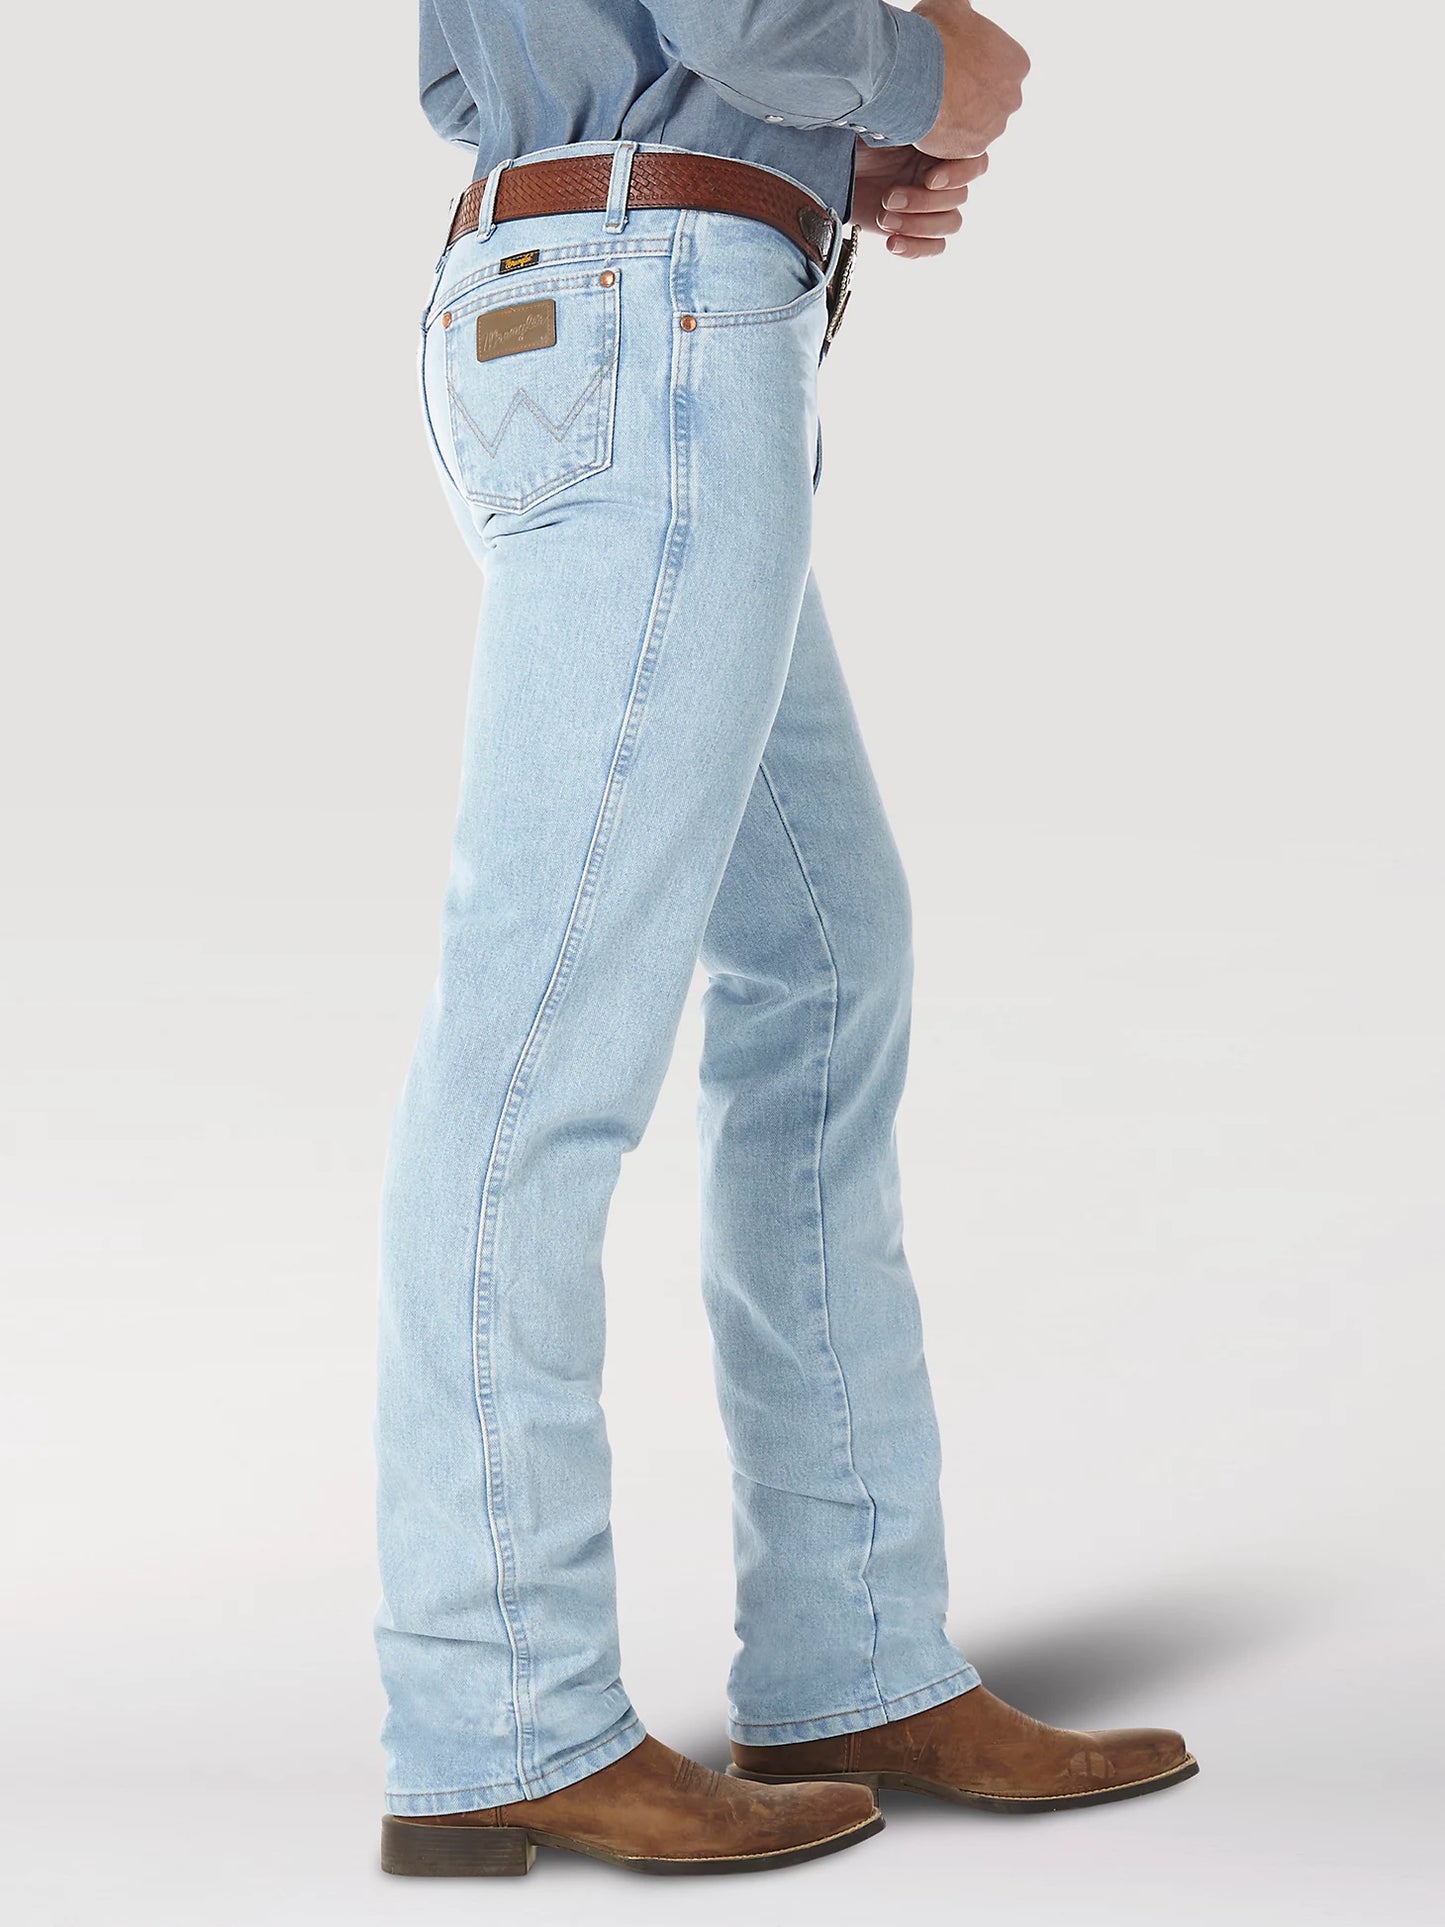 Wrangler Mens Slim Fit Cowboy Cut Jeans - 936GBH